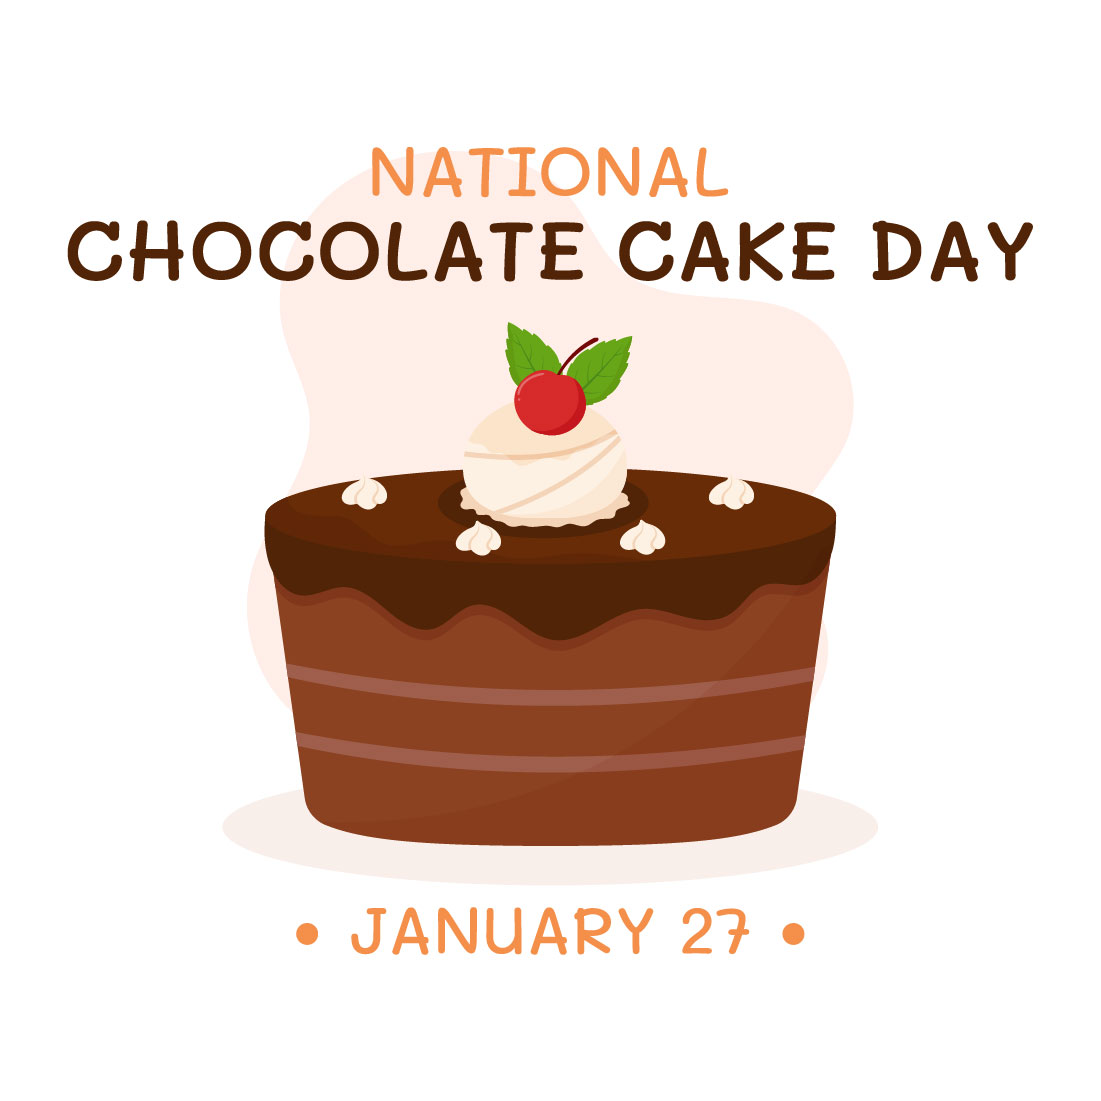 Chocolate Cake Day Cartoon Illustration Design cover image.